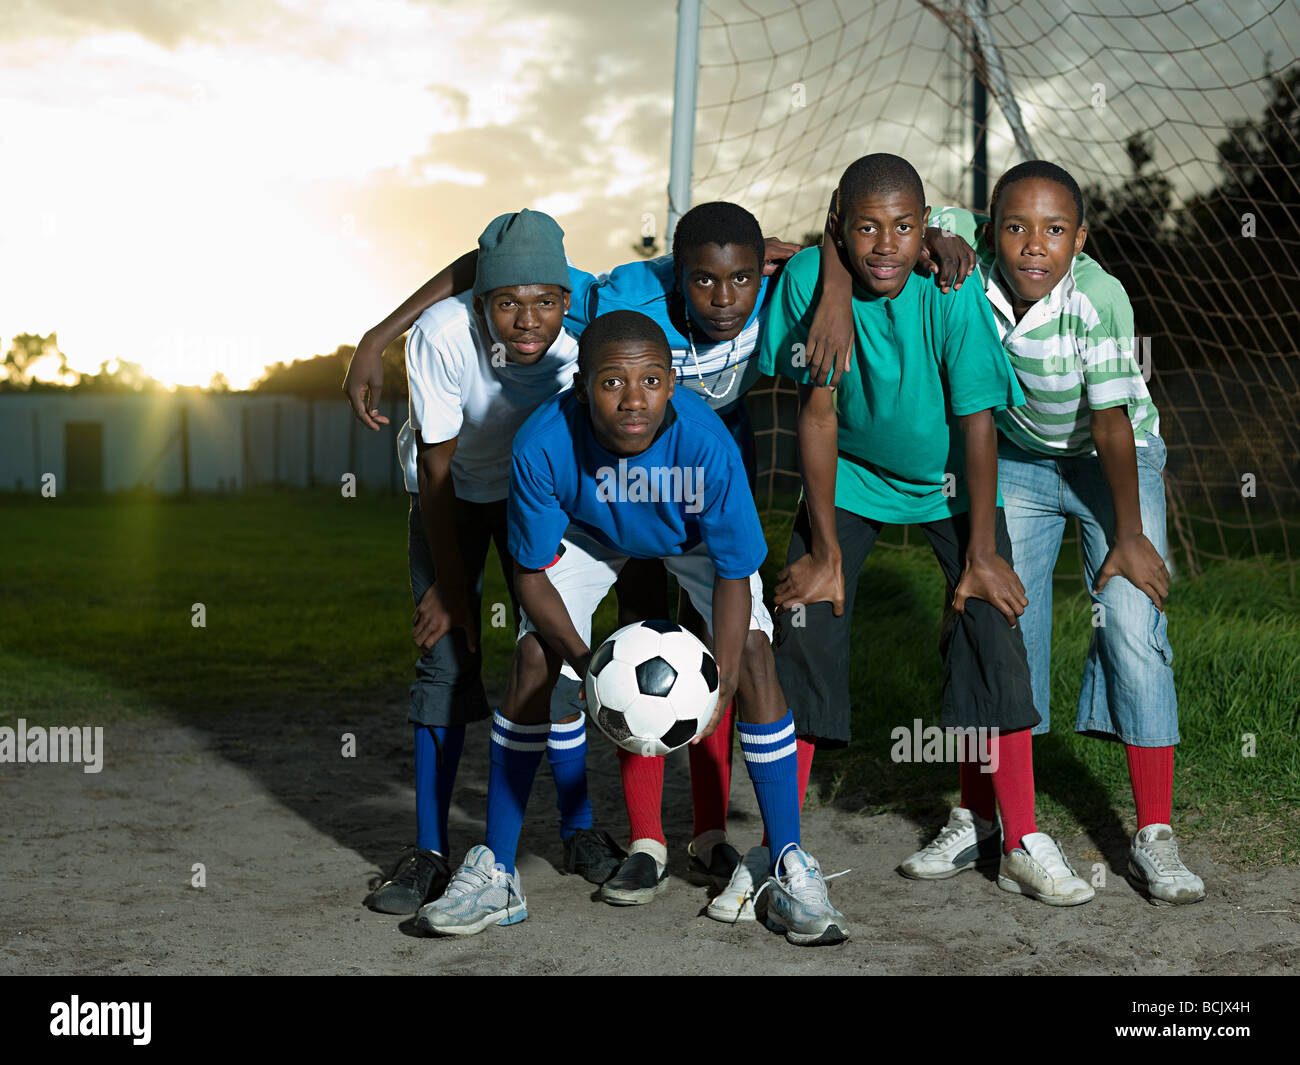 Adolescents sur terrain de football Banque D'Images